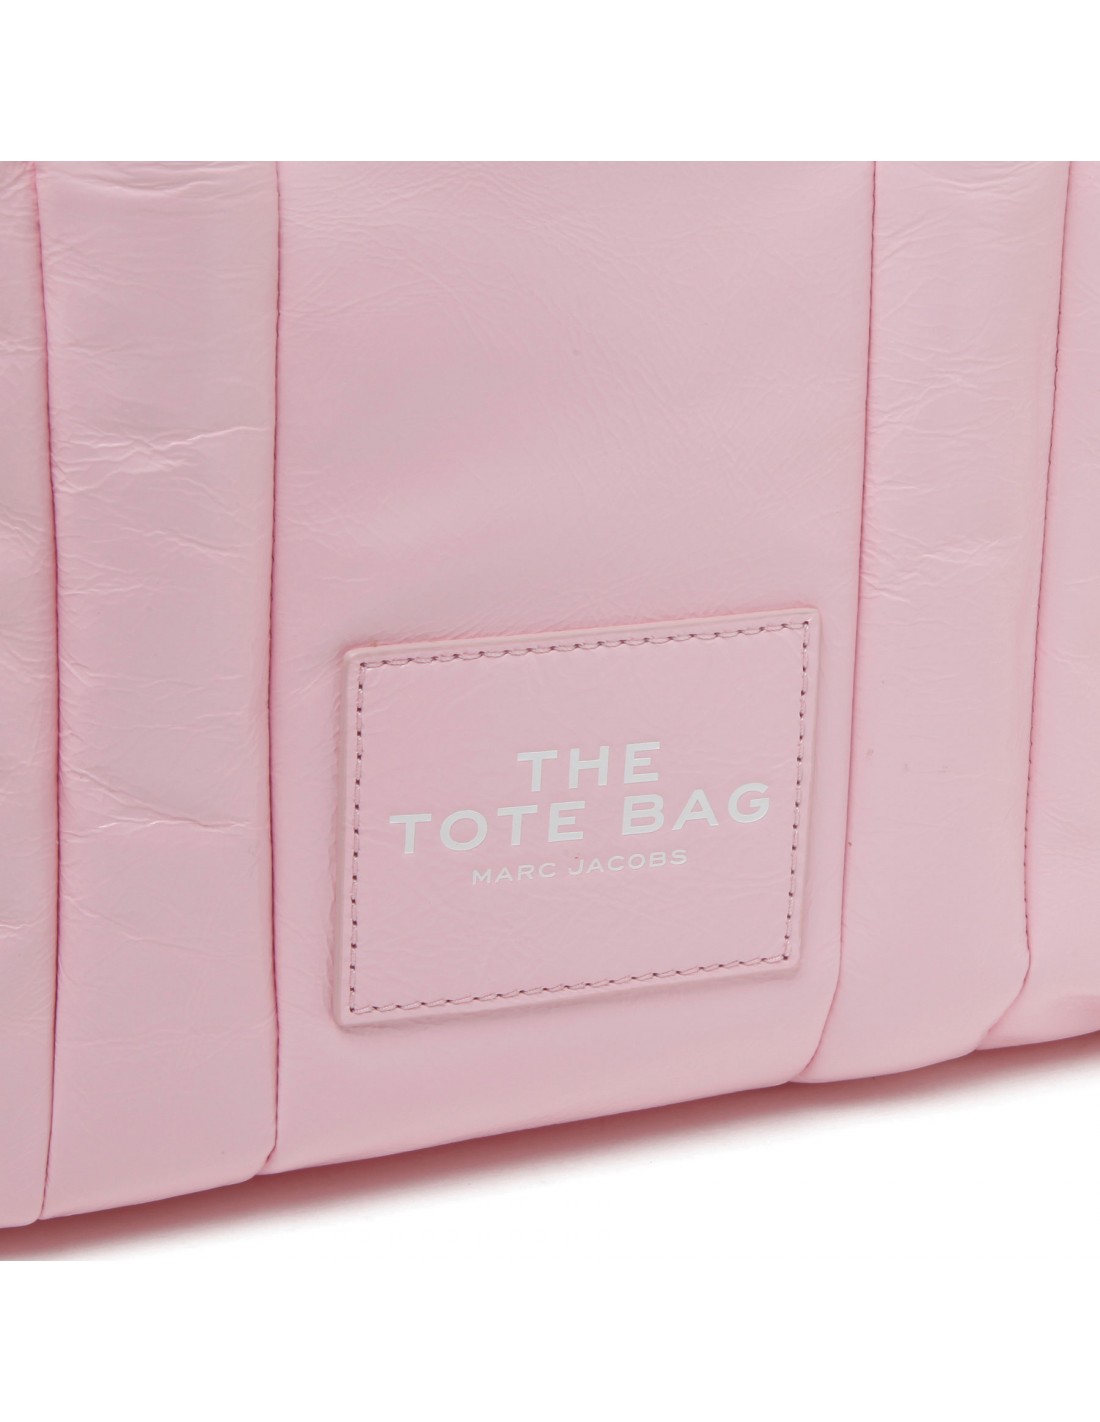 The Shiny Crinkle Mini Tote Bag